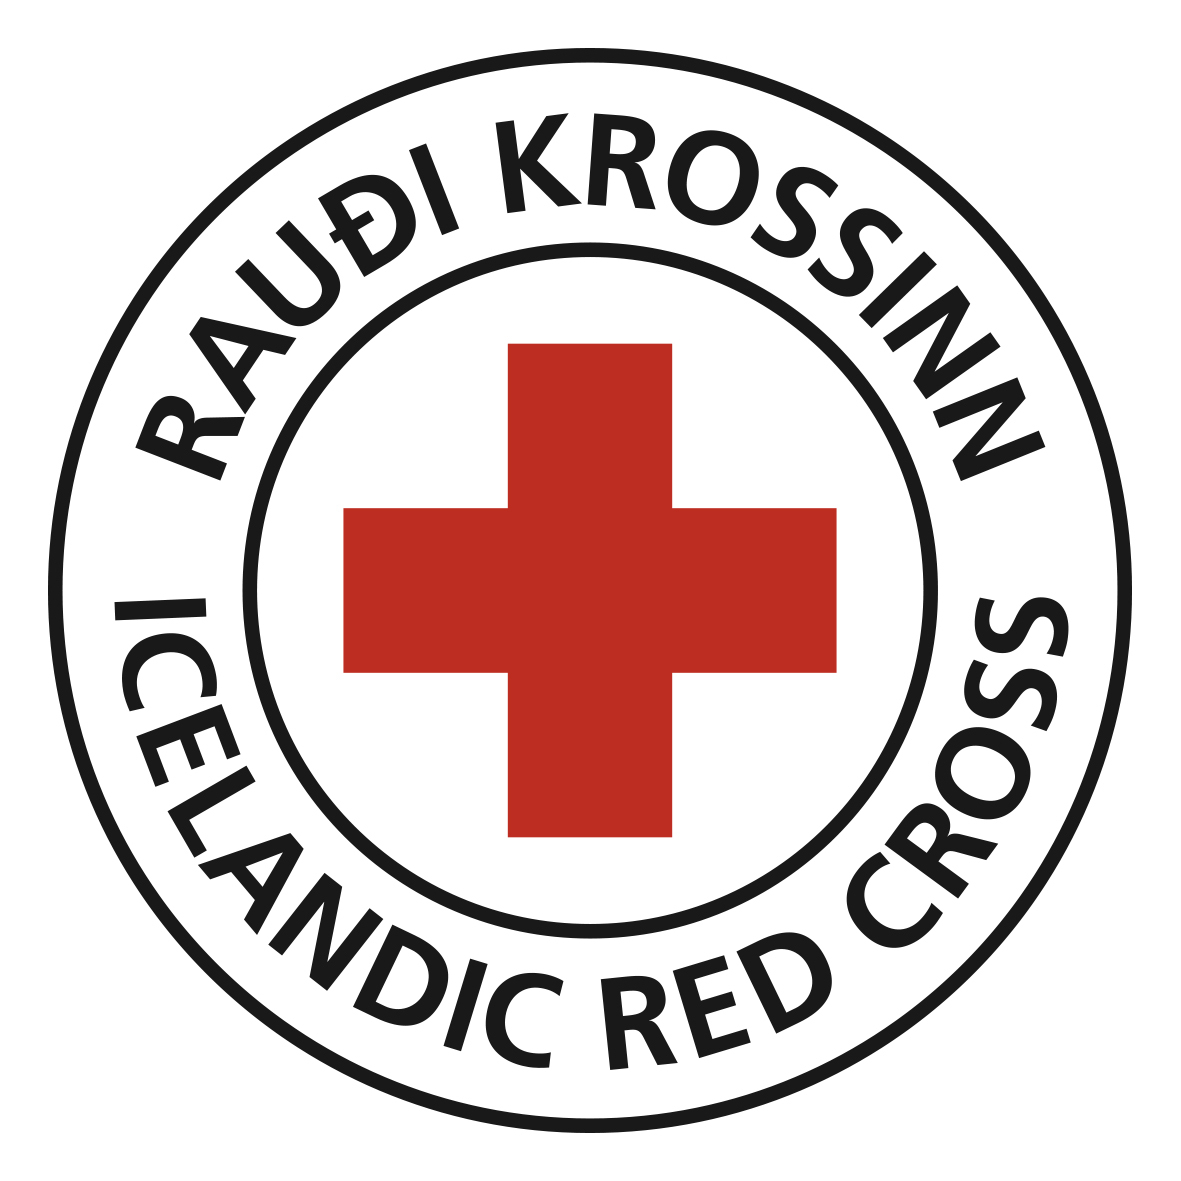 Icelandic Red Cross logo